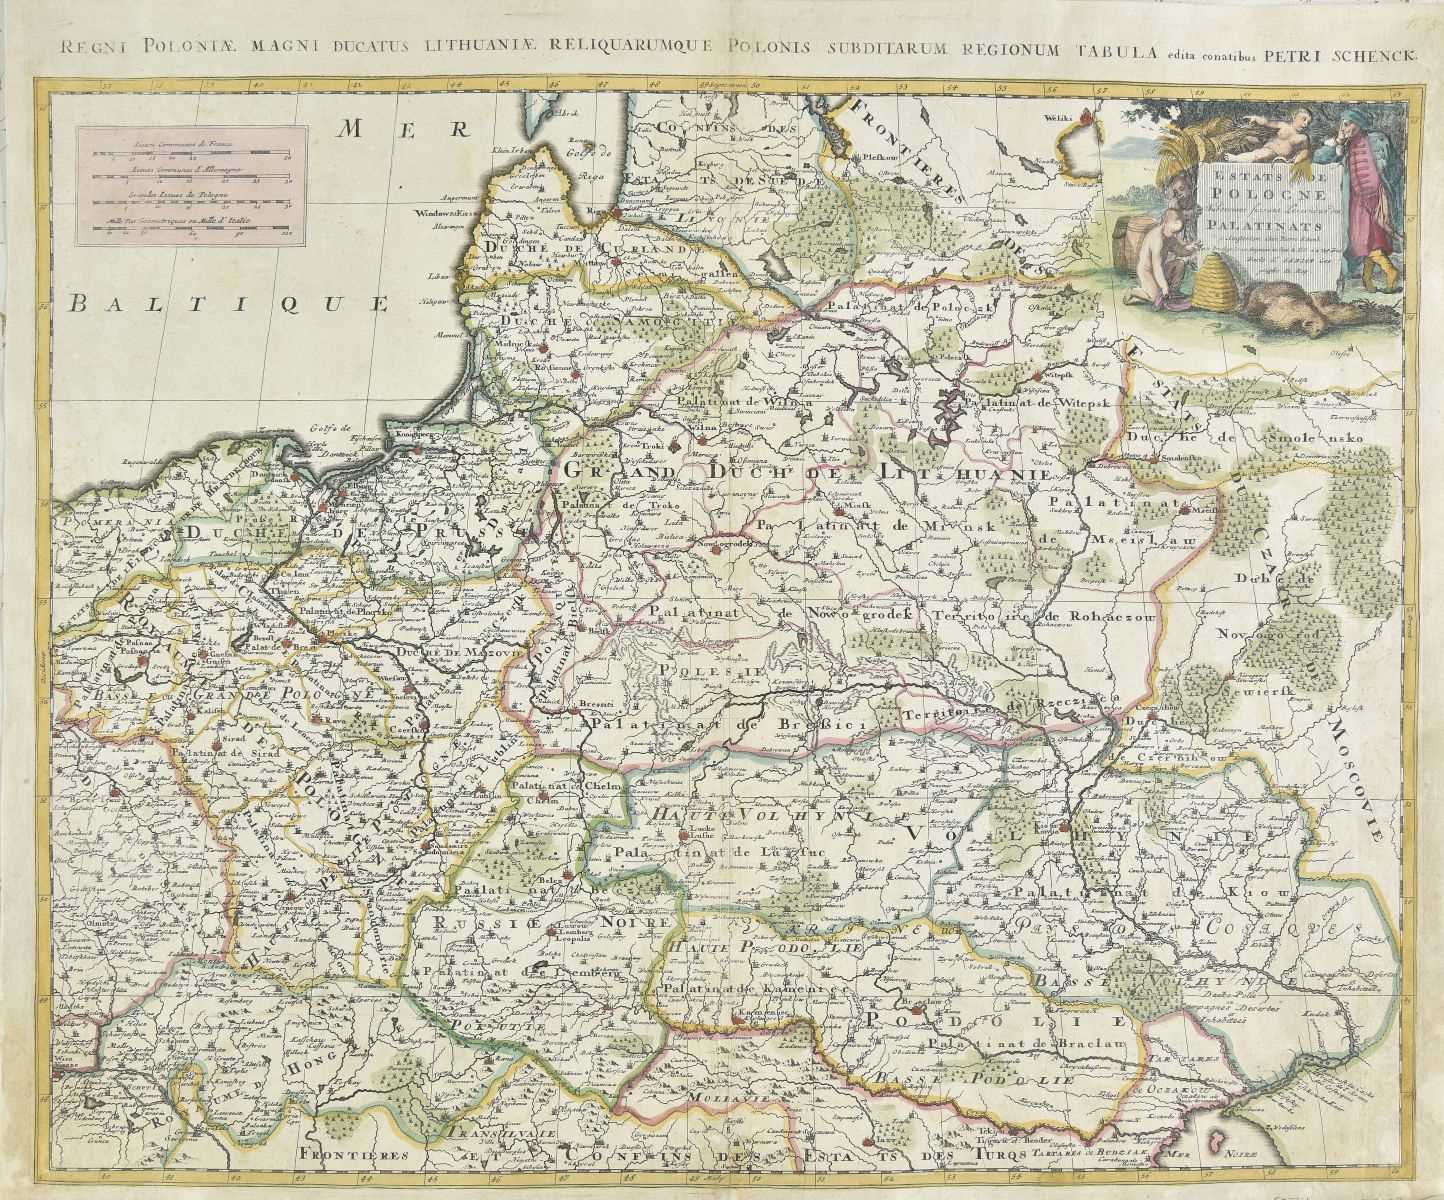 Lot 139 - Poland. Schenk (Pieter), Estats de Pologne, [1700 or later]